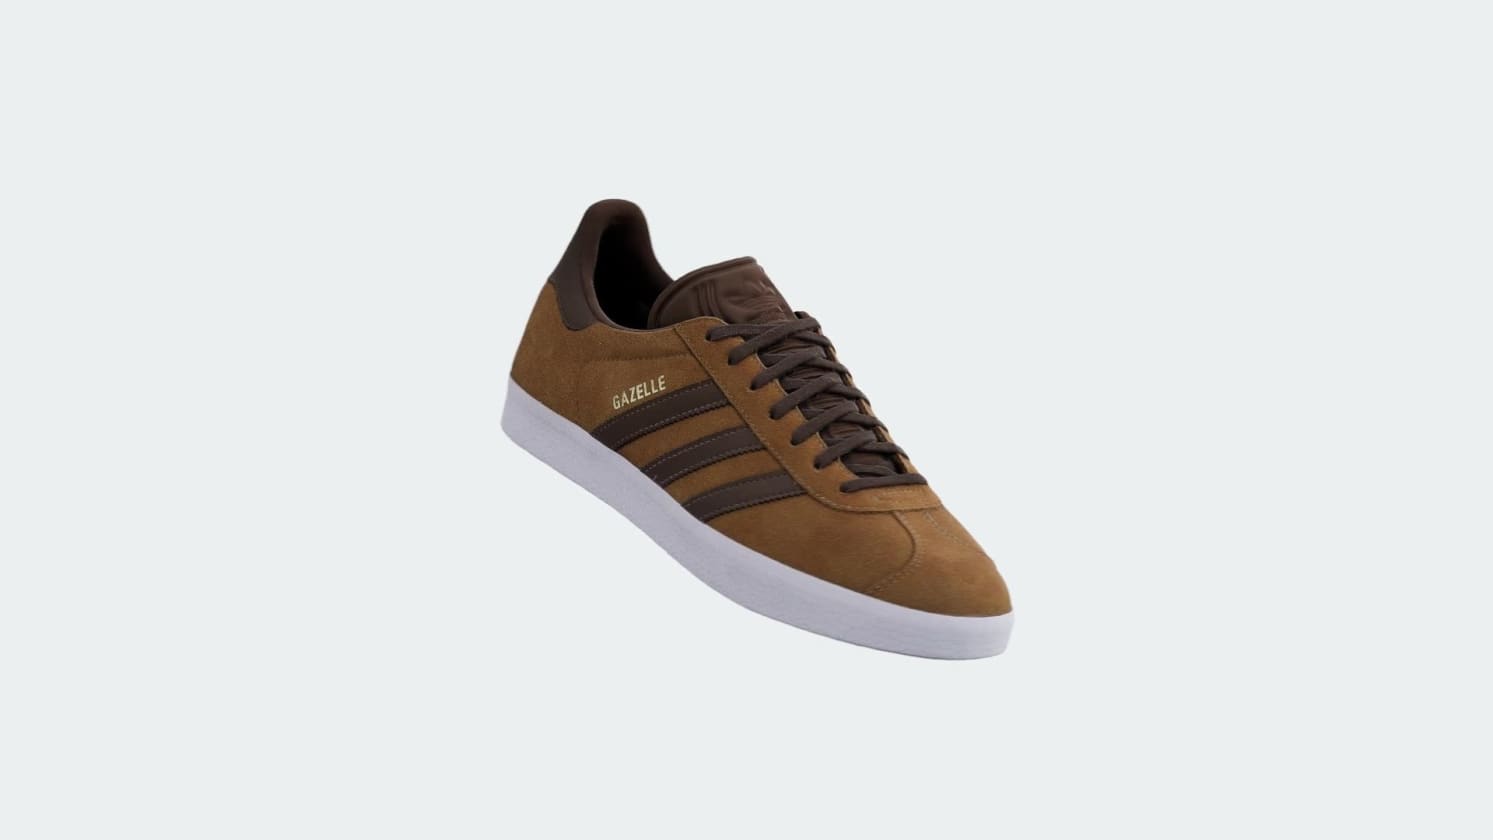 Cortar Tren opción adidas Gazelle Shoes - Brown | Men's Lifestyle | adidas US